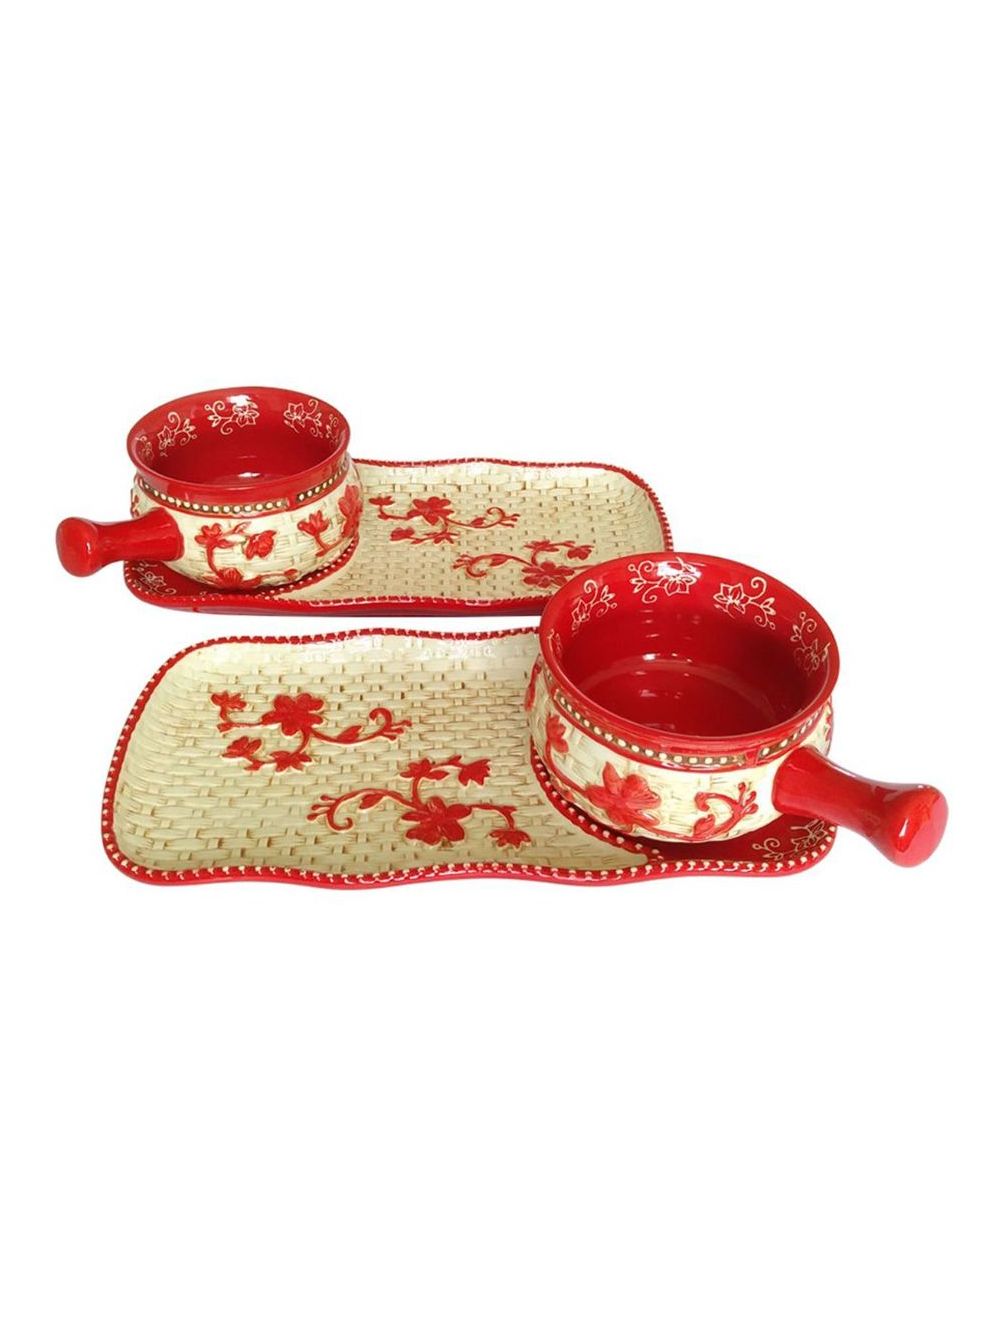 Temp-tations Floral Lace Basketweave Bowl & Appetizer Plate Set - 4 Piece-T48493-red